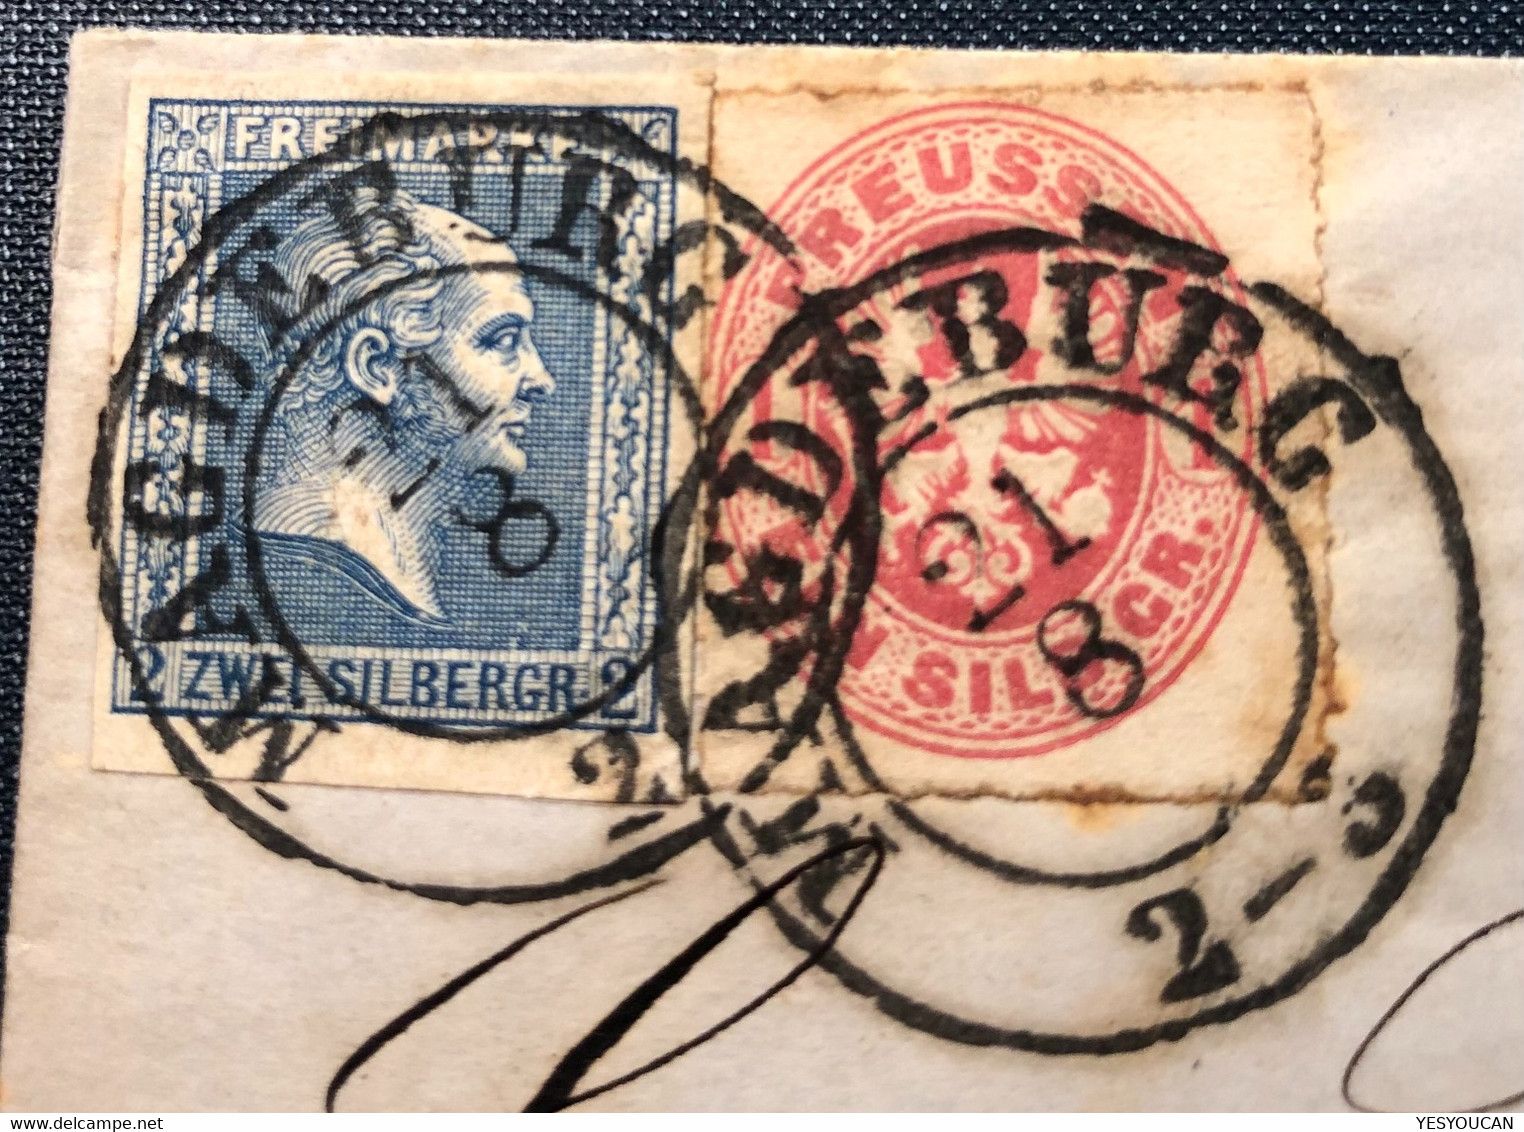 1862 Seltener MIF Brief MAGDEBURG>Hamburg (Preussen Prussia Cover Lettre Prusse Gepr Wasels BPP - Storia Postale